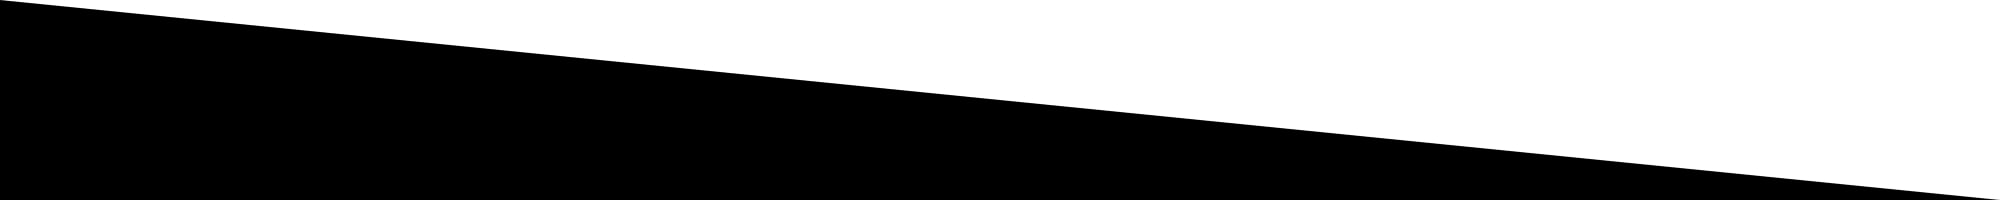 White to black background image